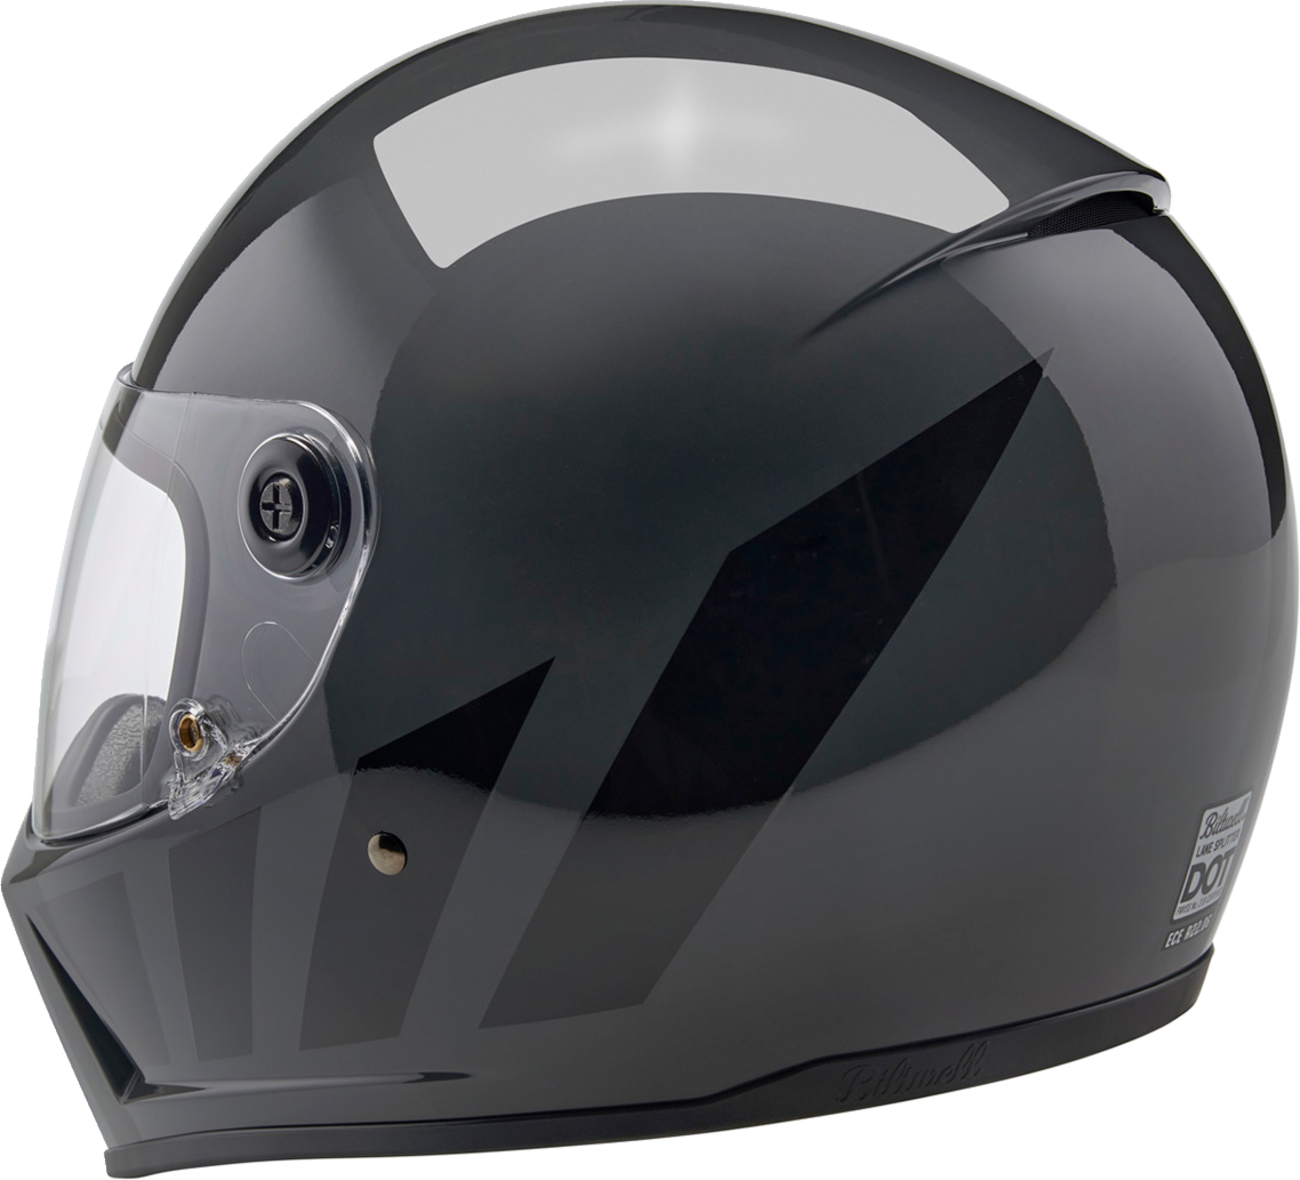 BILTWELL Lane Splitter Helmet - Storm Gray Inertia - 2XL 1004-569-506